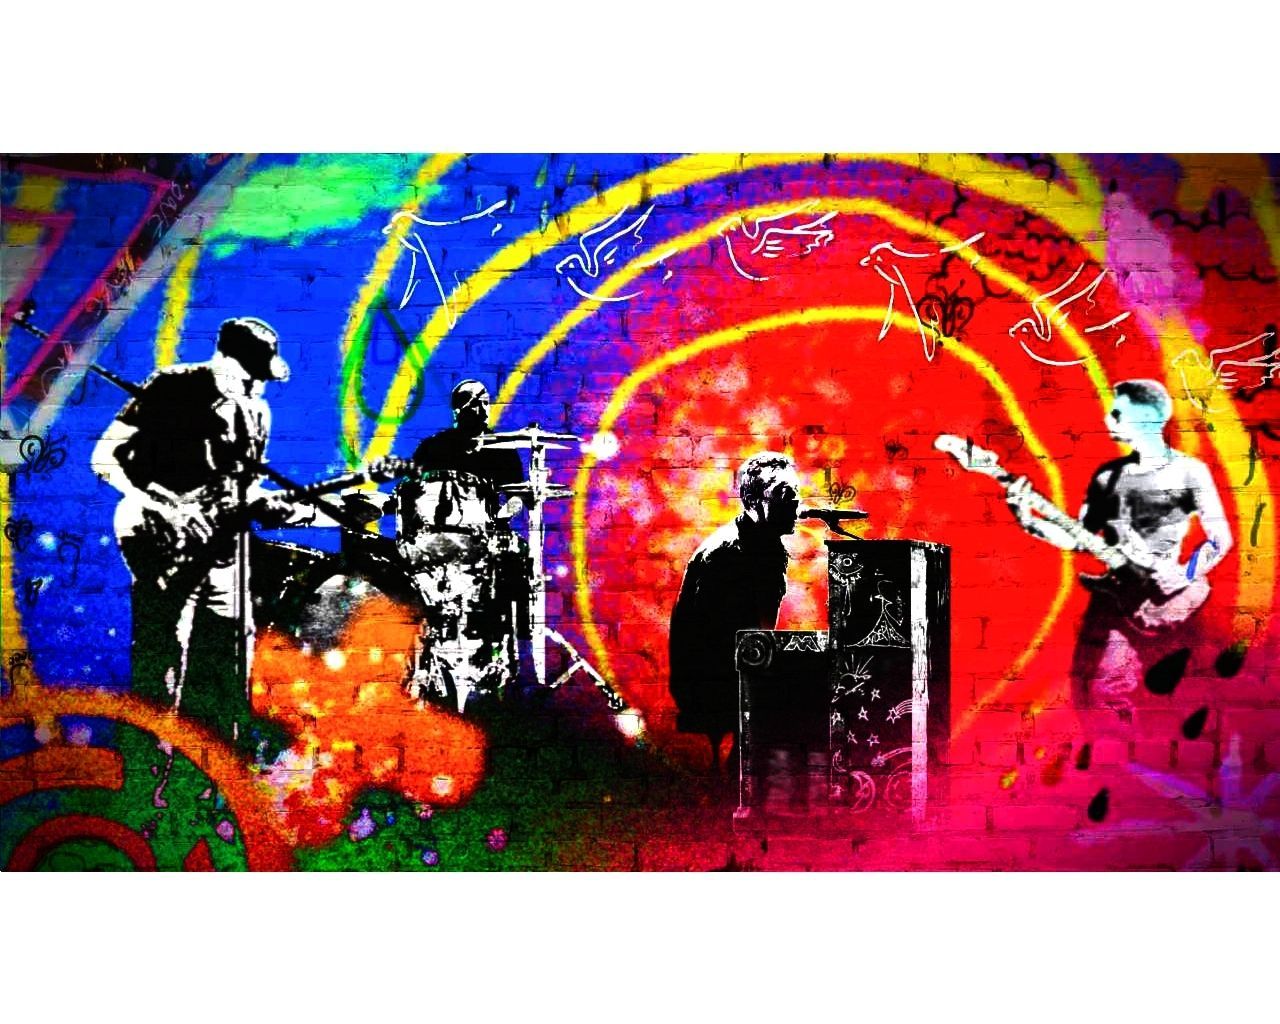 Coldplay Paradise - Coldplay Wallpaper 26033340 - Fanpop